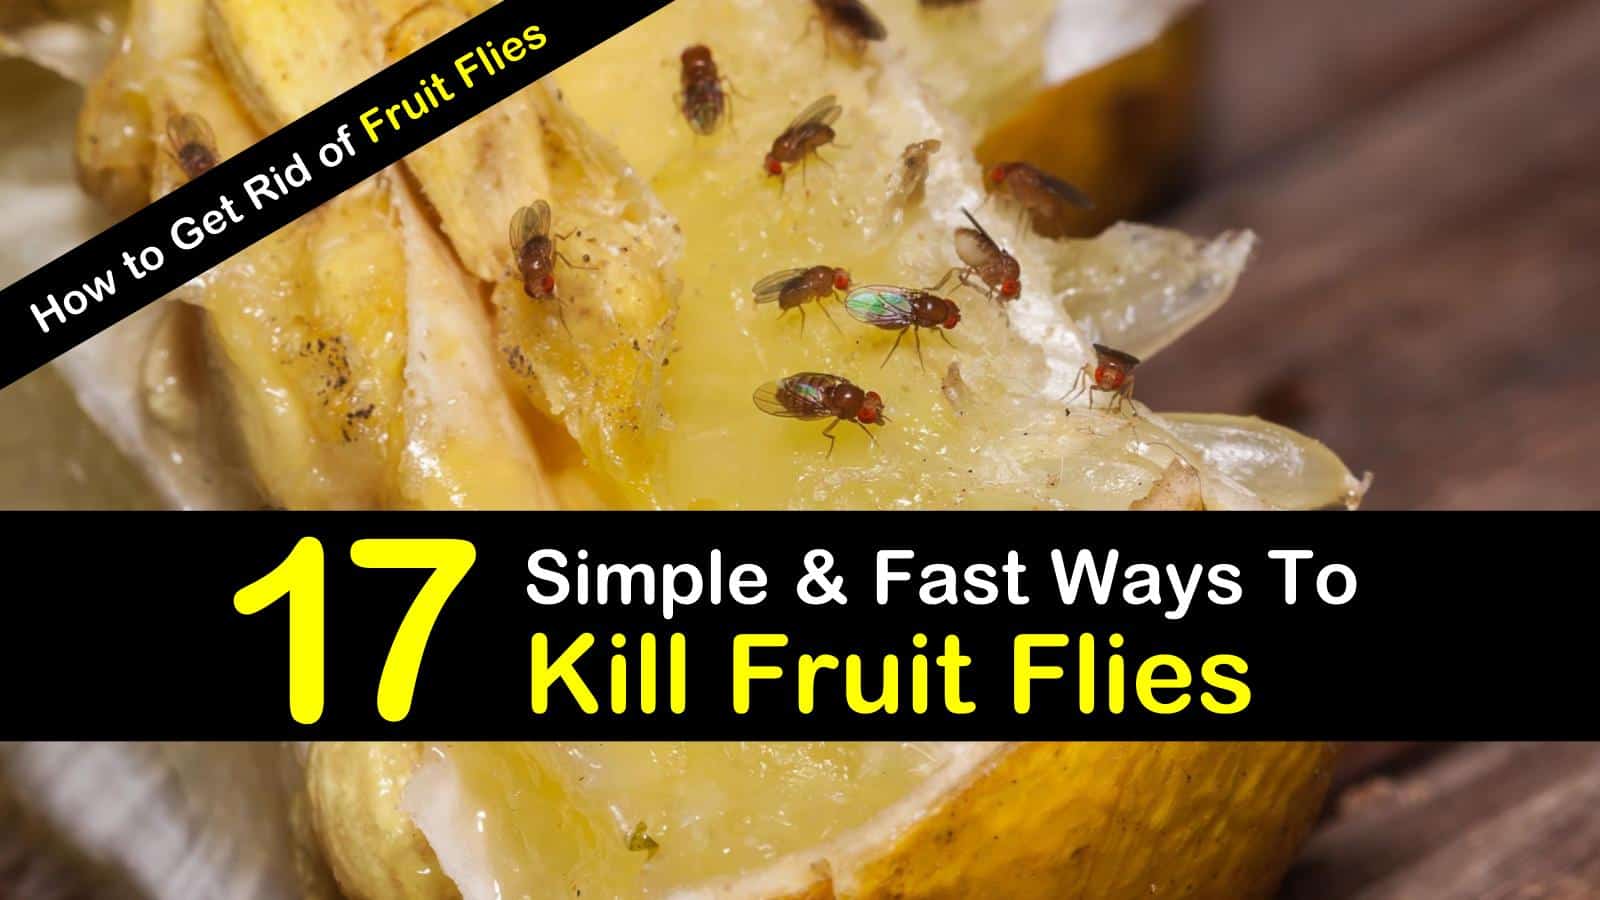 How To Get Rid Of Fruit Flies T1 